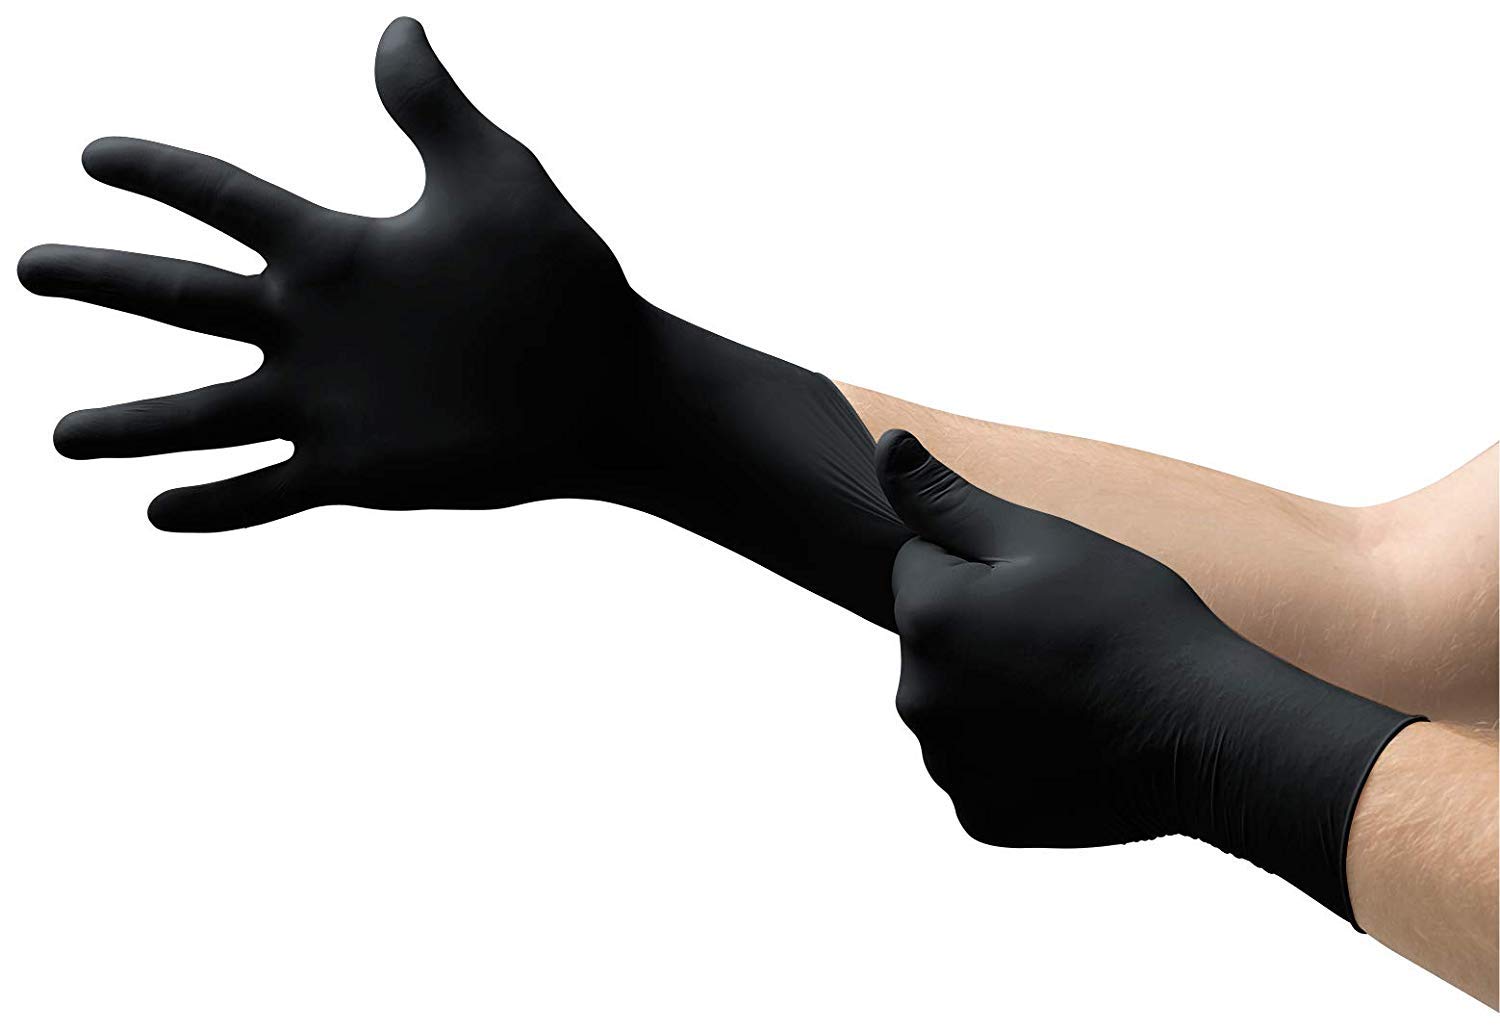 Black Latex Free Disposable Exam Nitrile Gloves